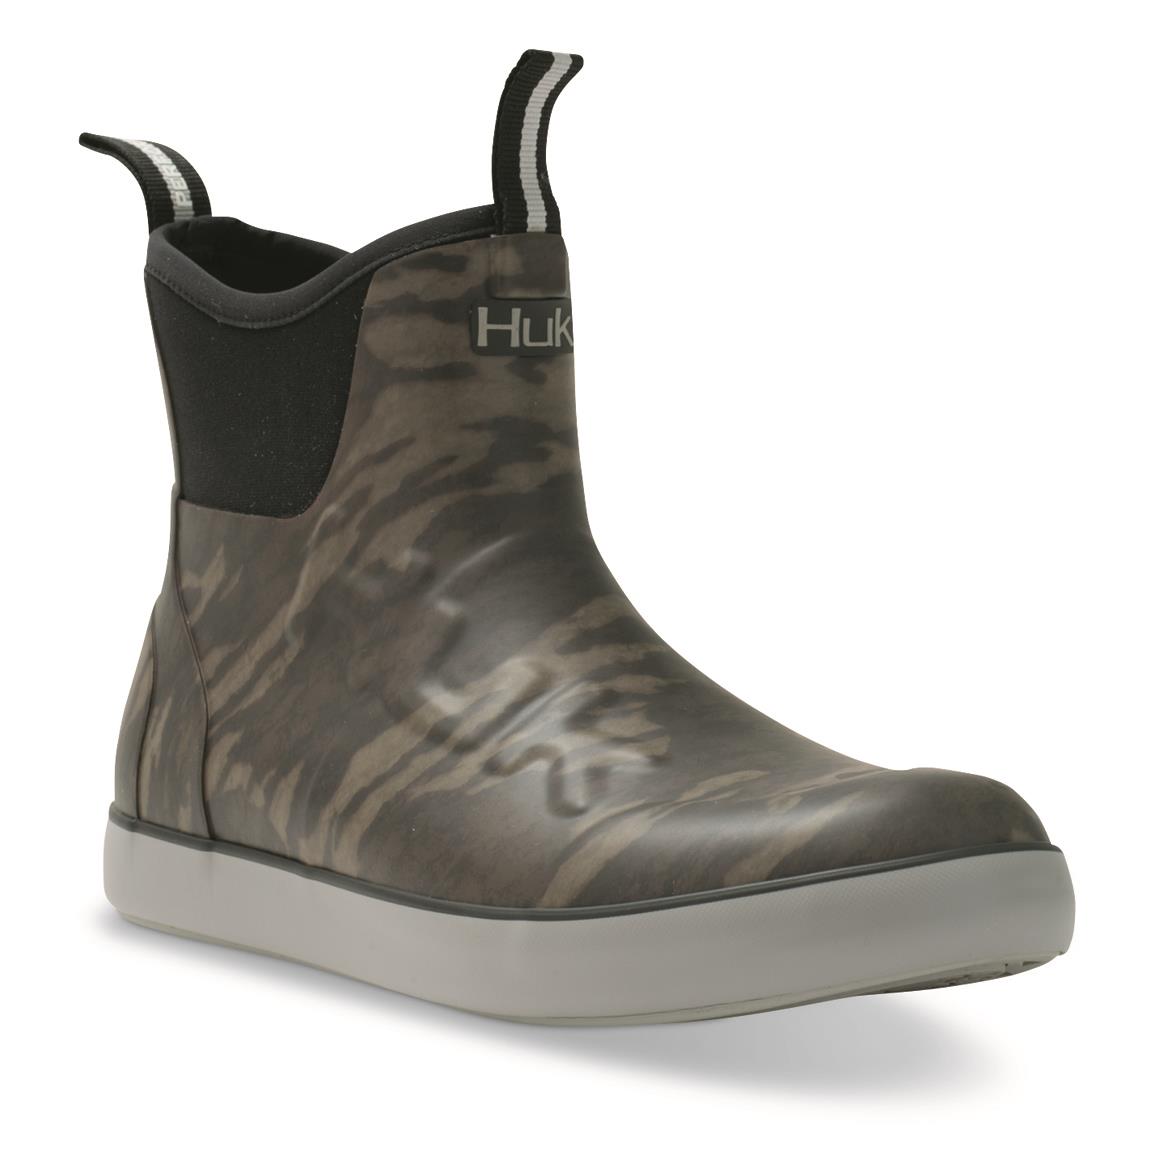 Huk Men's Rogue Wave Slip-on Rubber Boots, Camo - 719519, Rubber & Rain ...